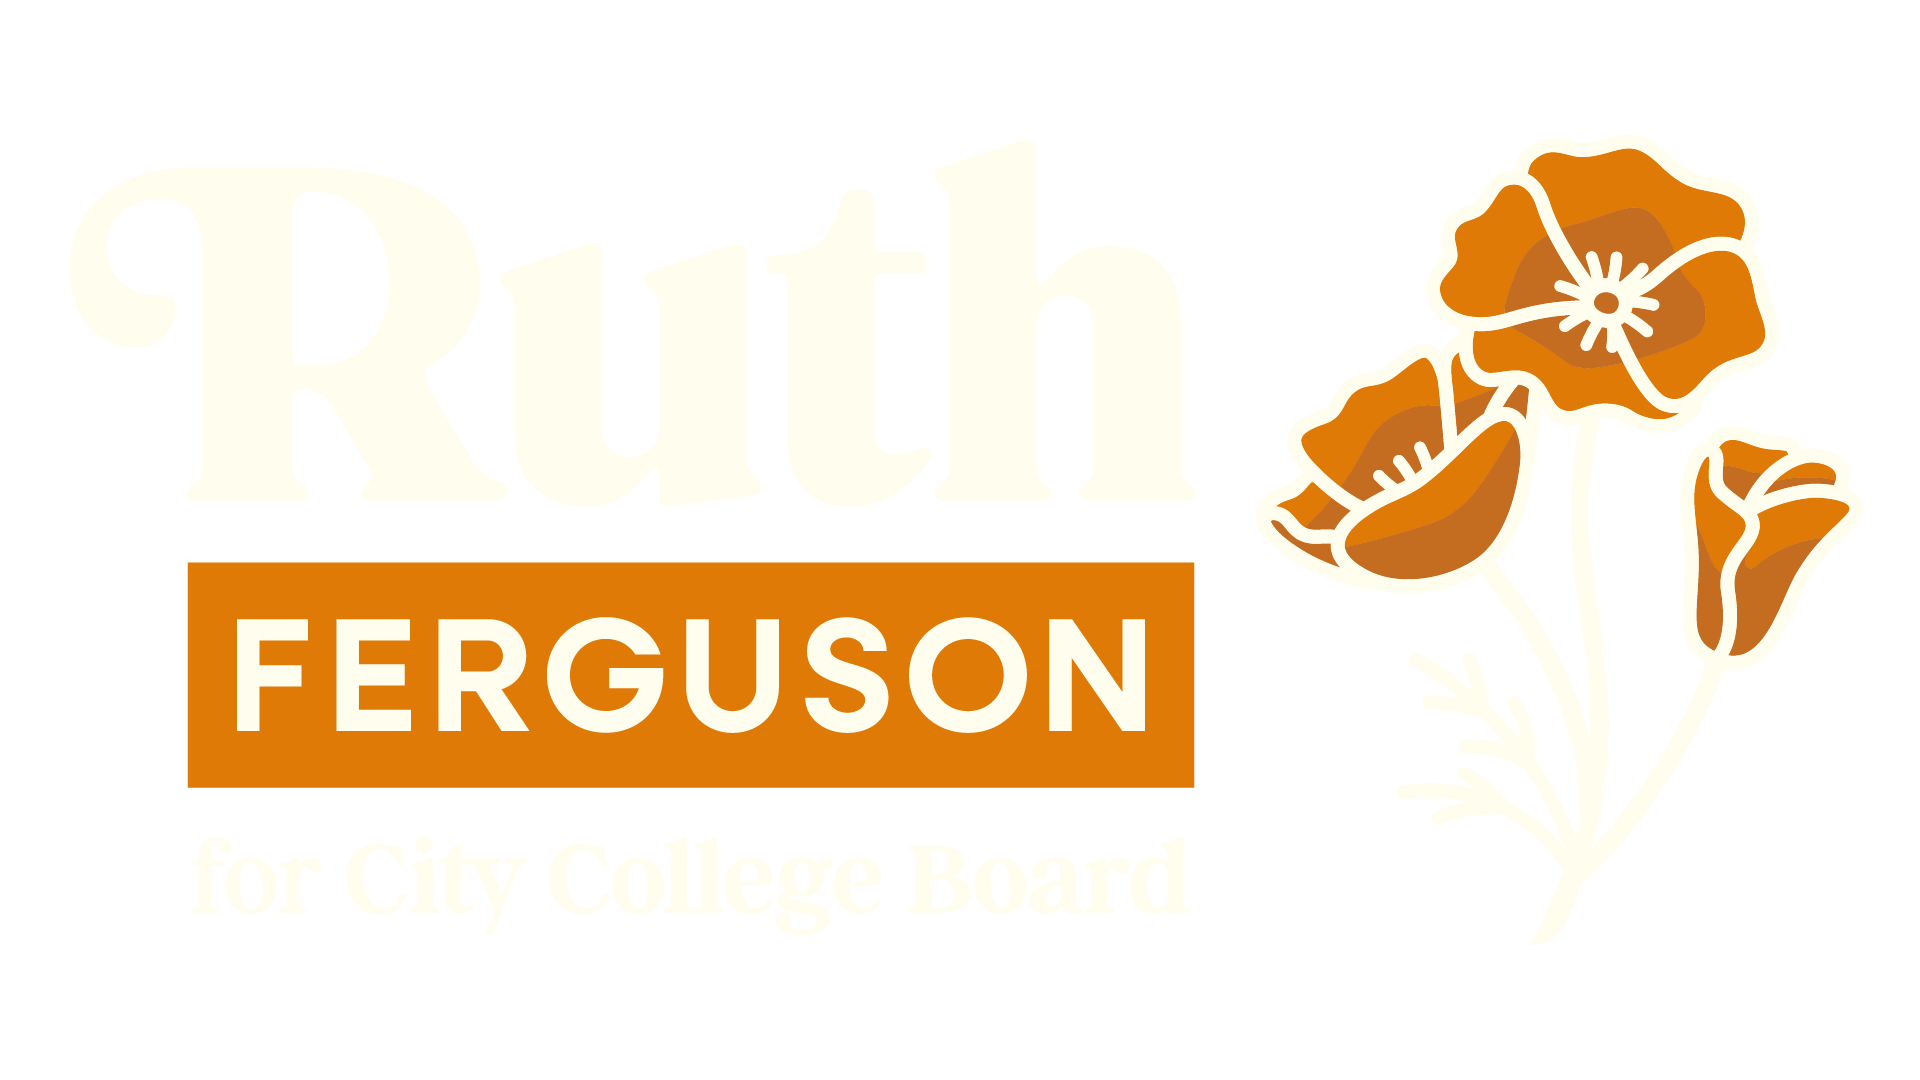 Ruth Ferguson for City College Board